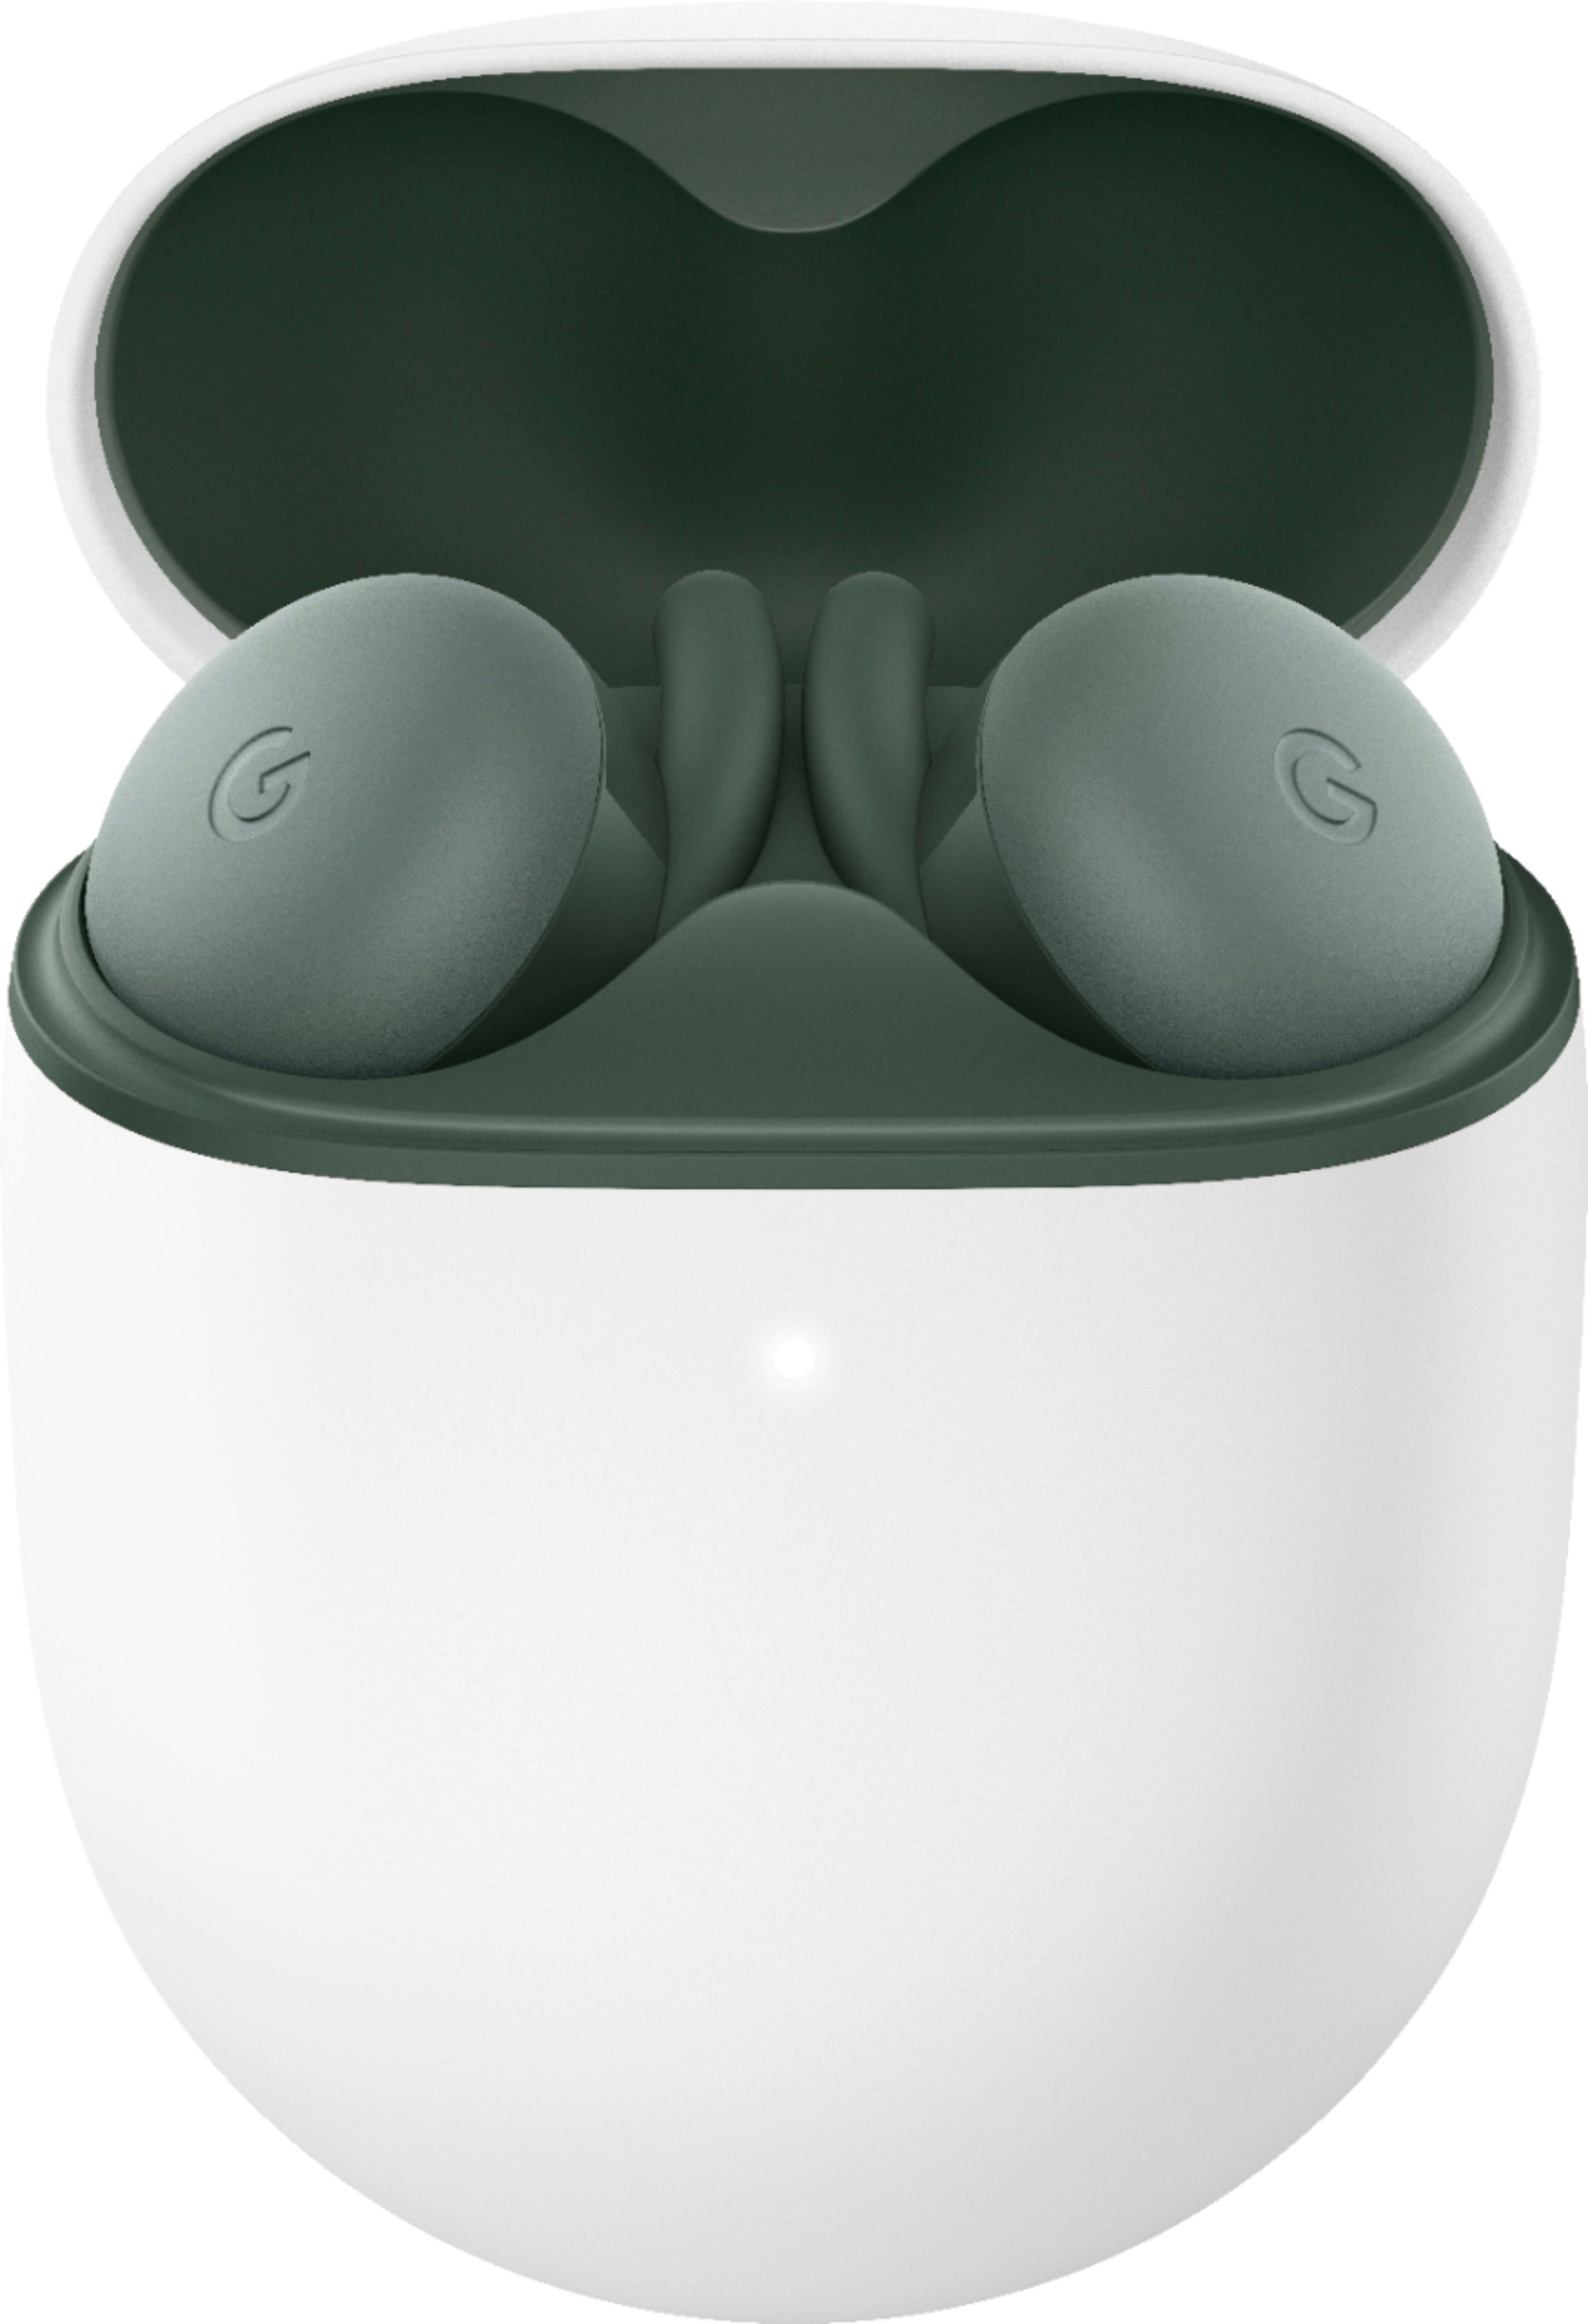 Google - Geek Squad Certified Refurbished Pixel Buds A-Series True Wireless In-Ear Headphones - Olive